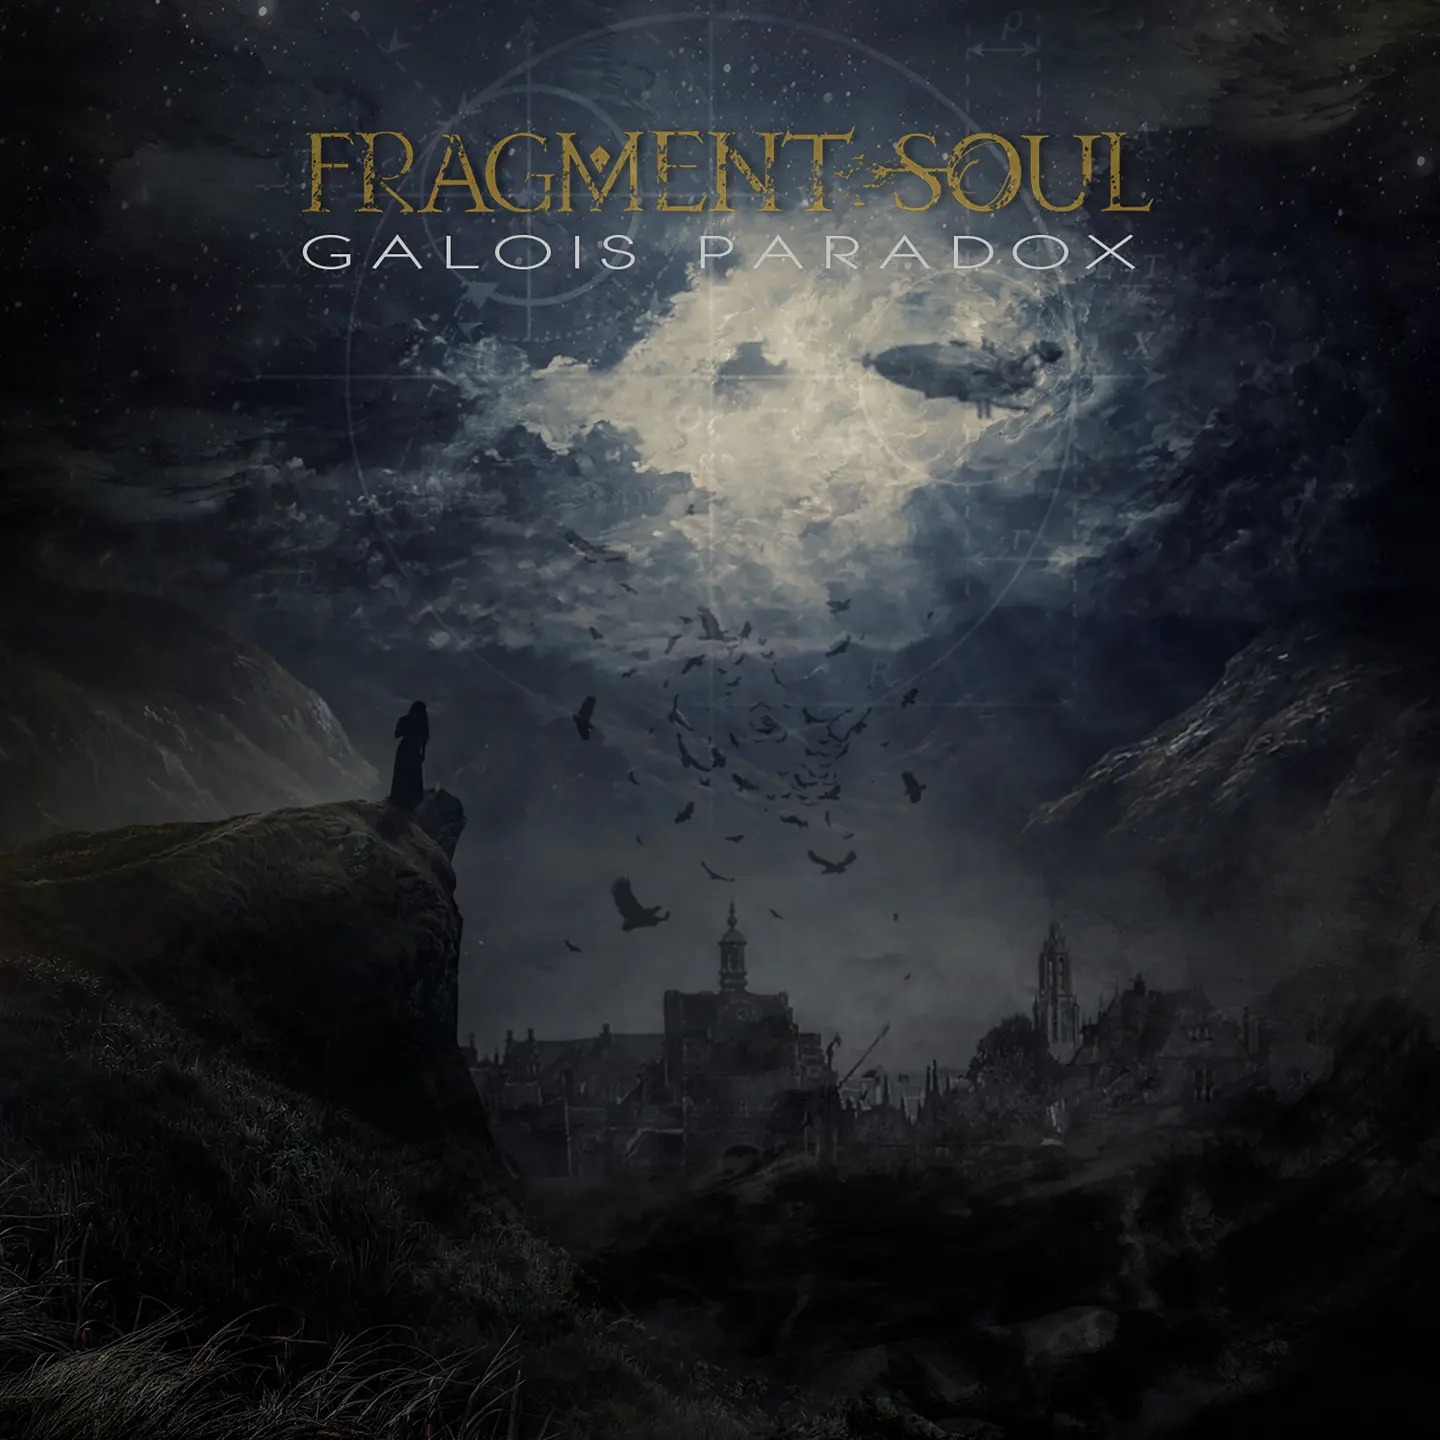 Fragment Soul - Galois Paradox